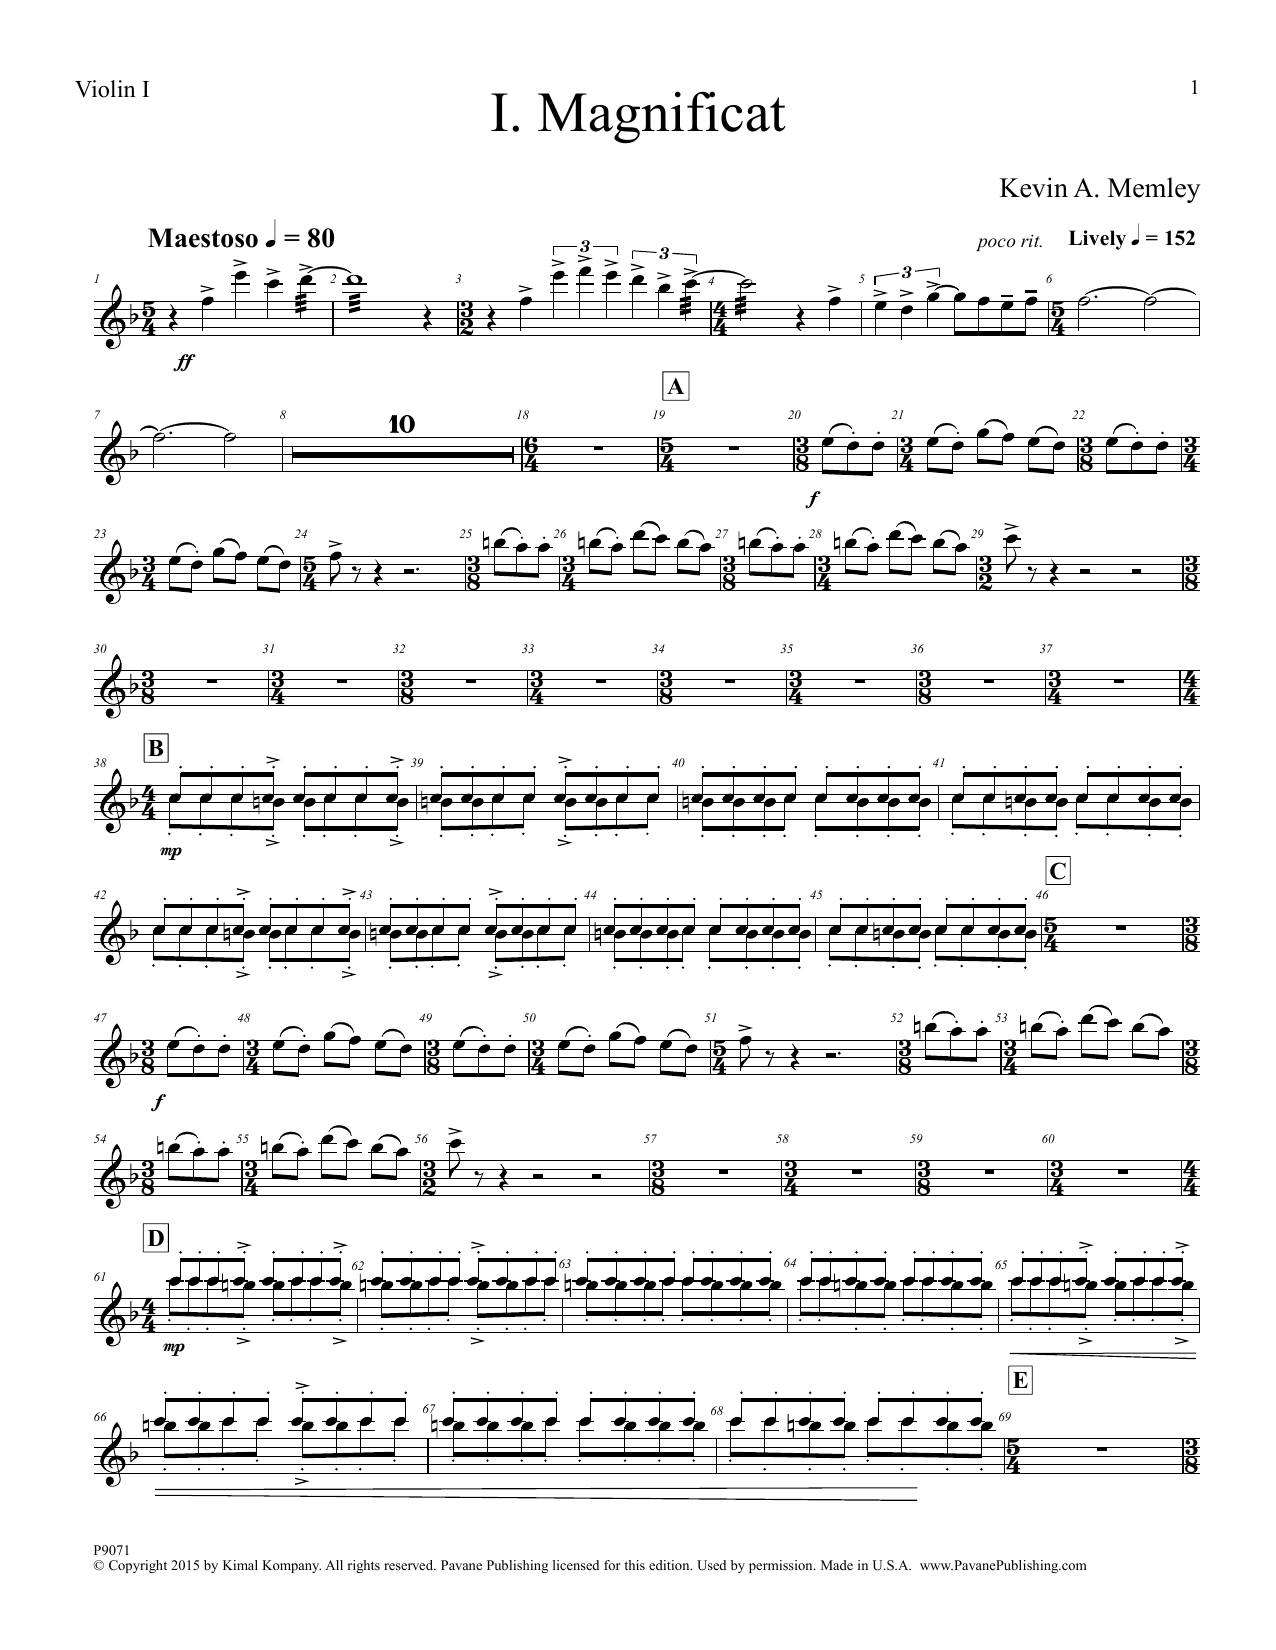 Download Kevin A. Memley Magnificat - Violin 1, 2 Sheet Music